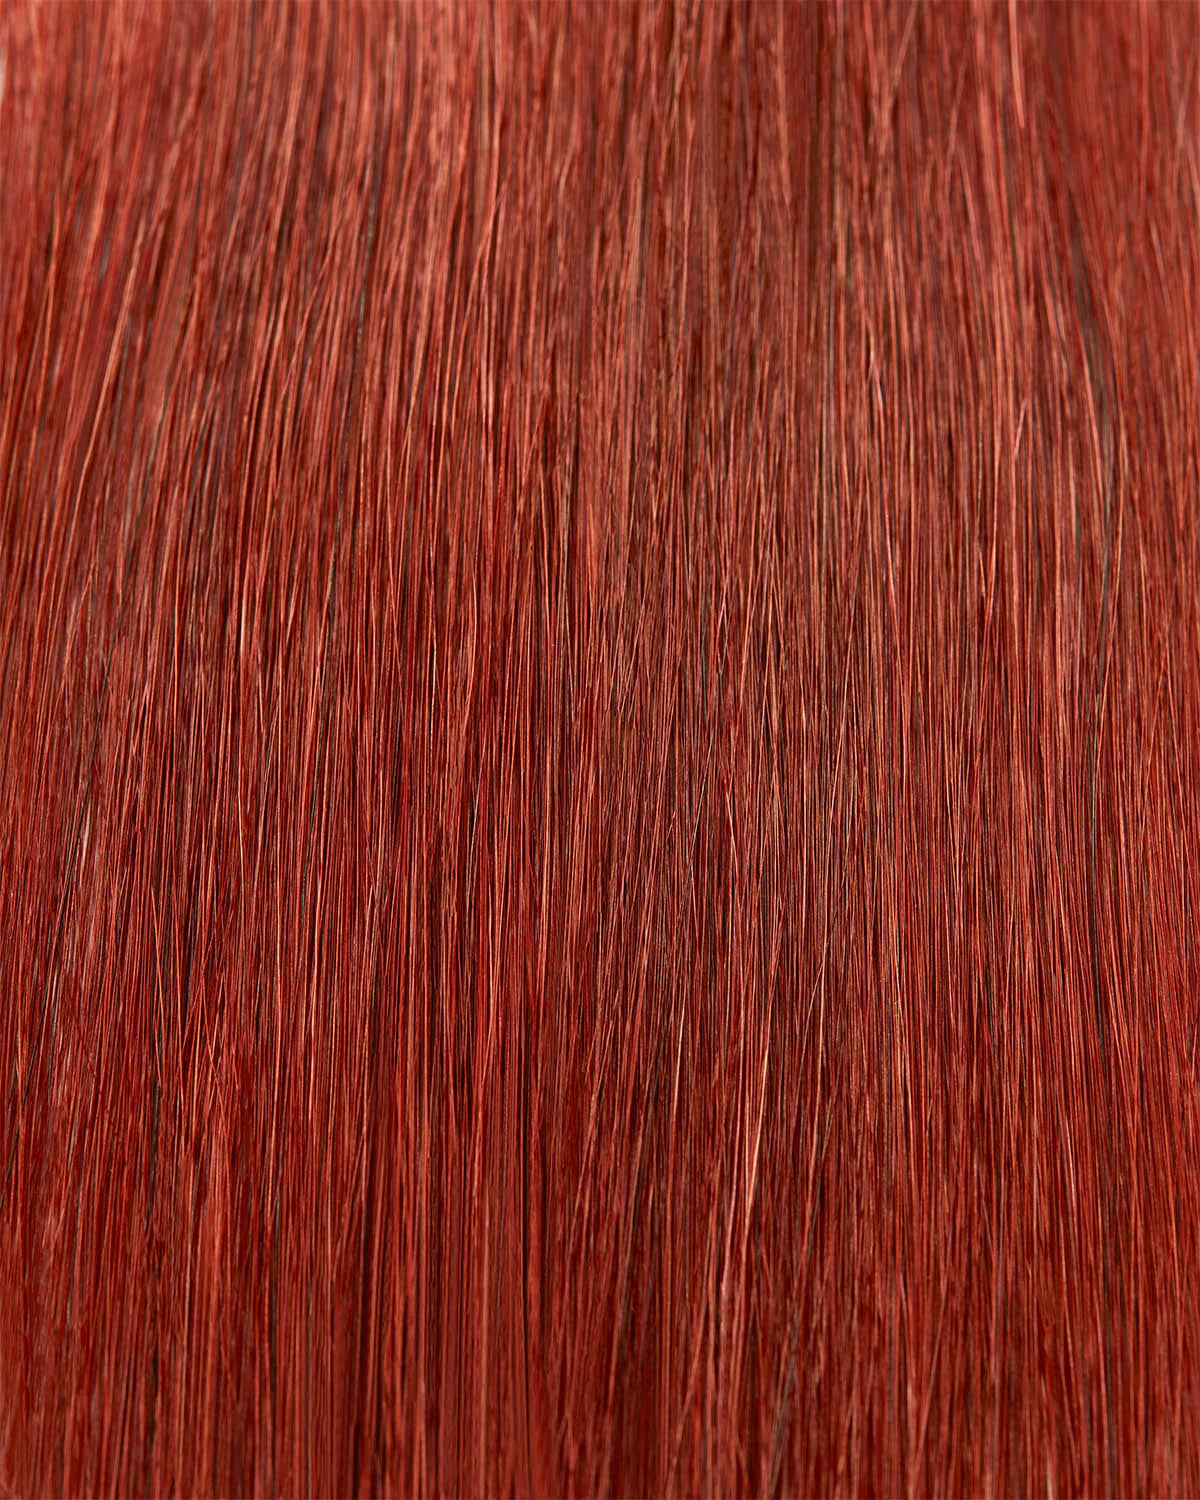 Maria Nila Colour Refresh Autumn Red 6.60